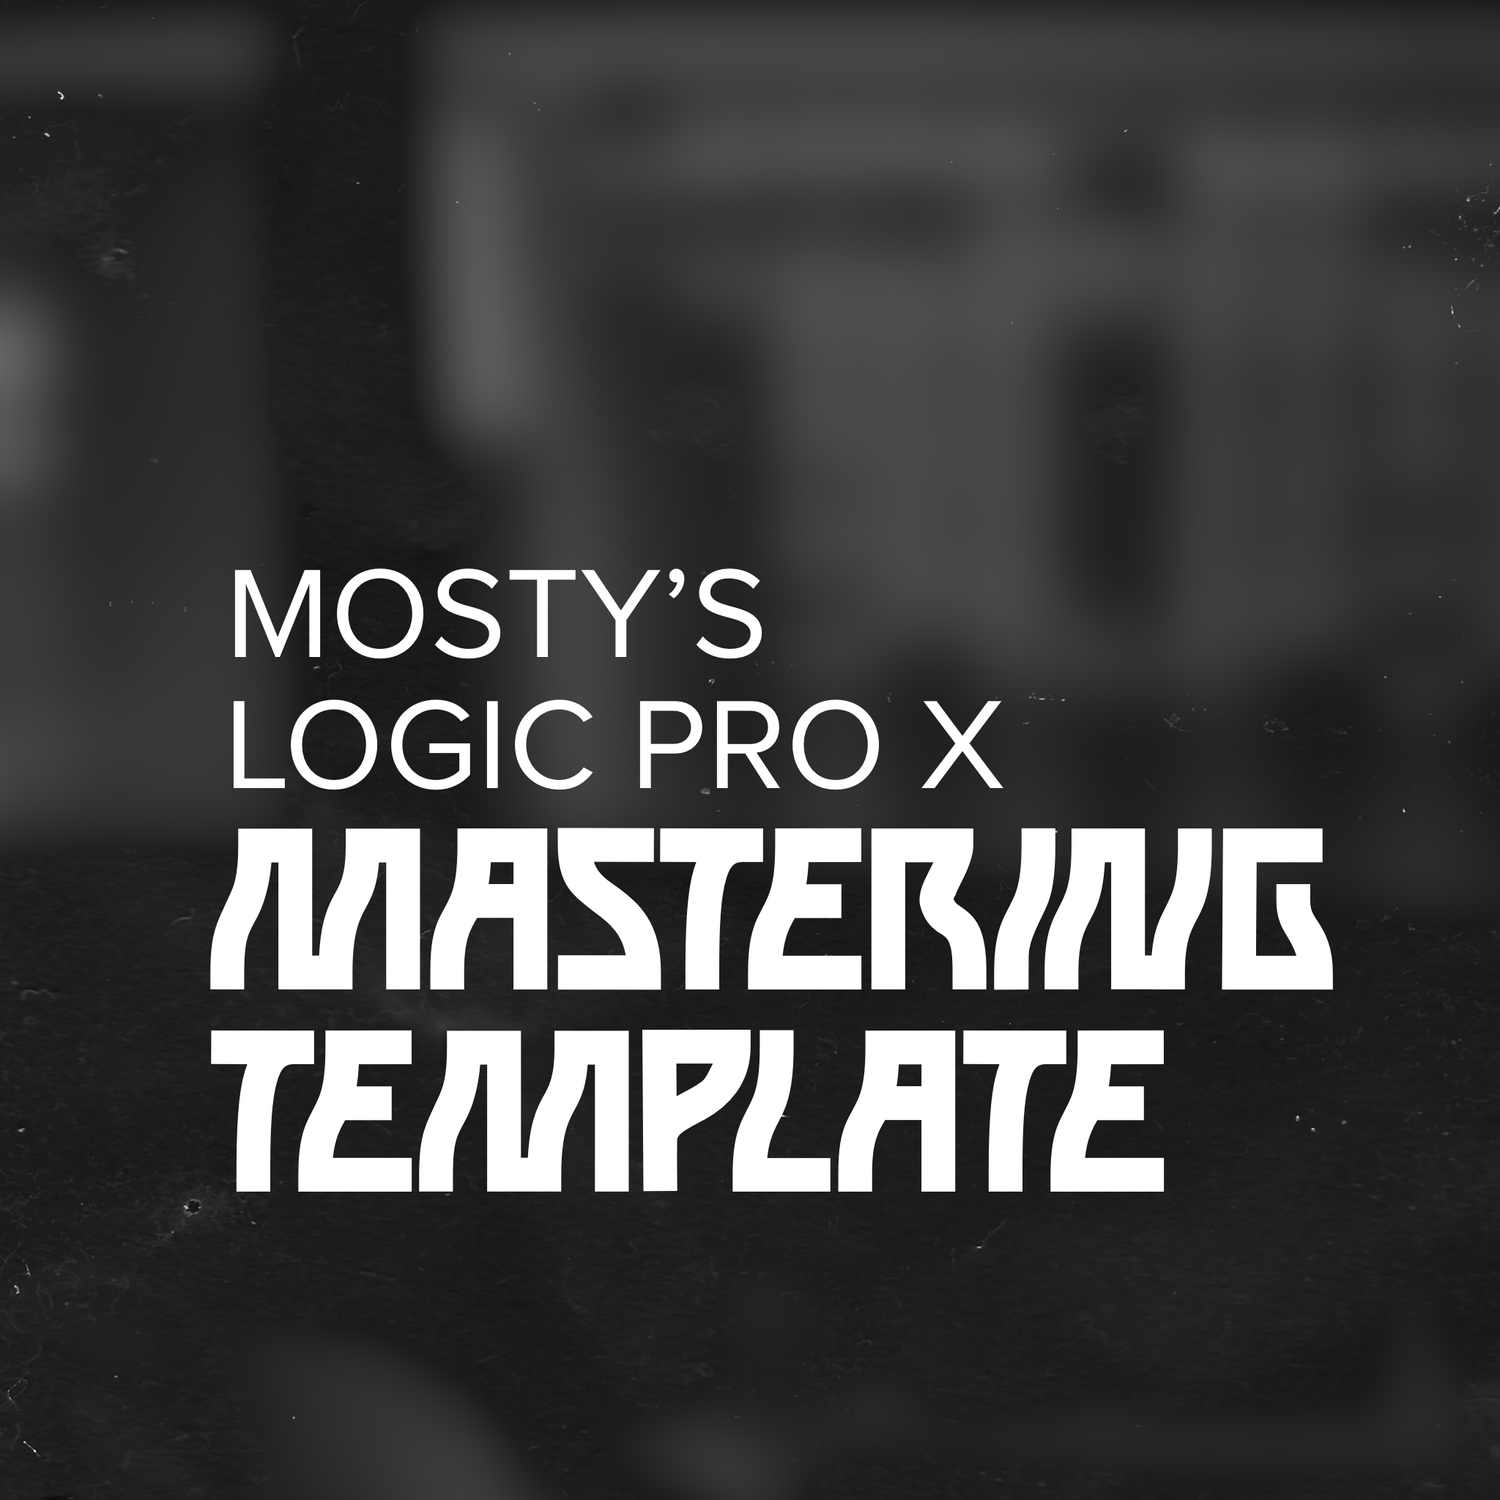 Logic Pro X Mastering Template